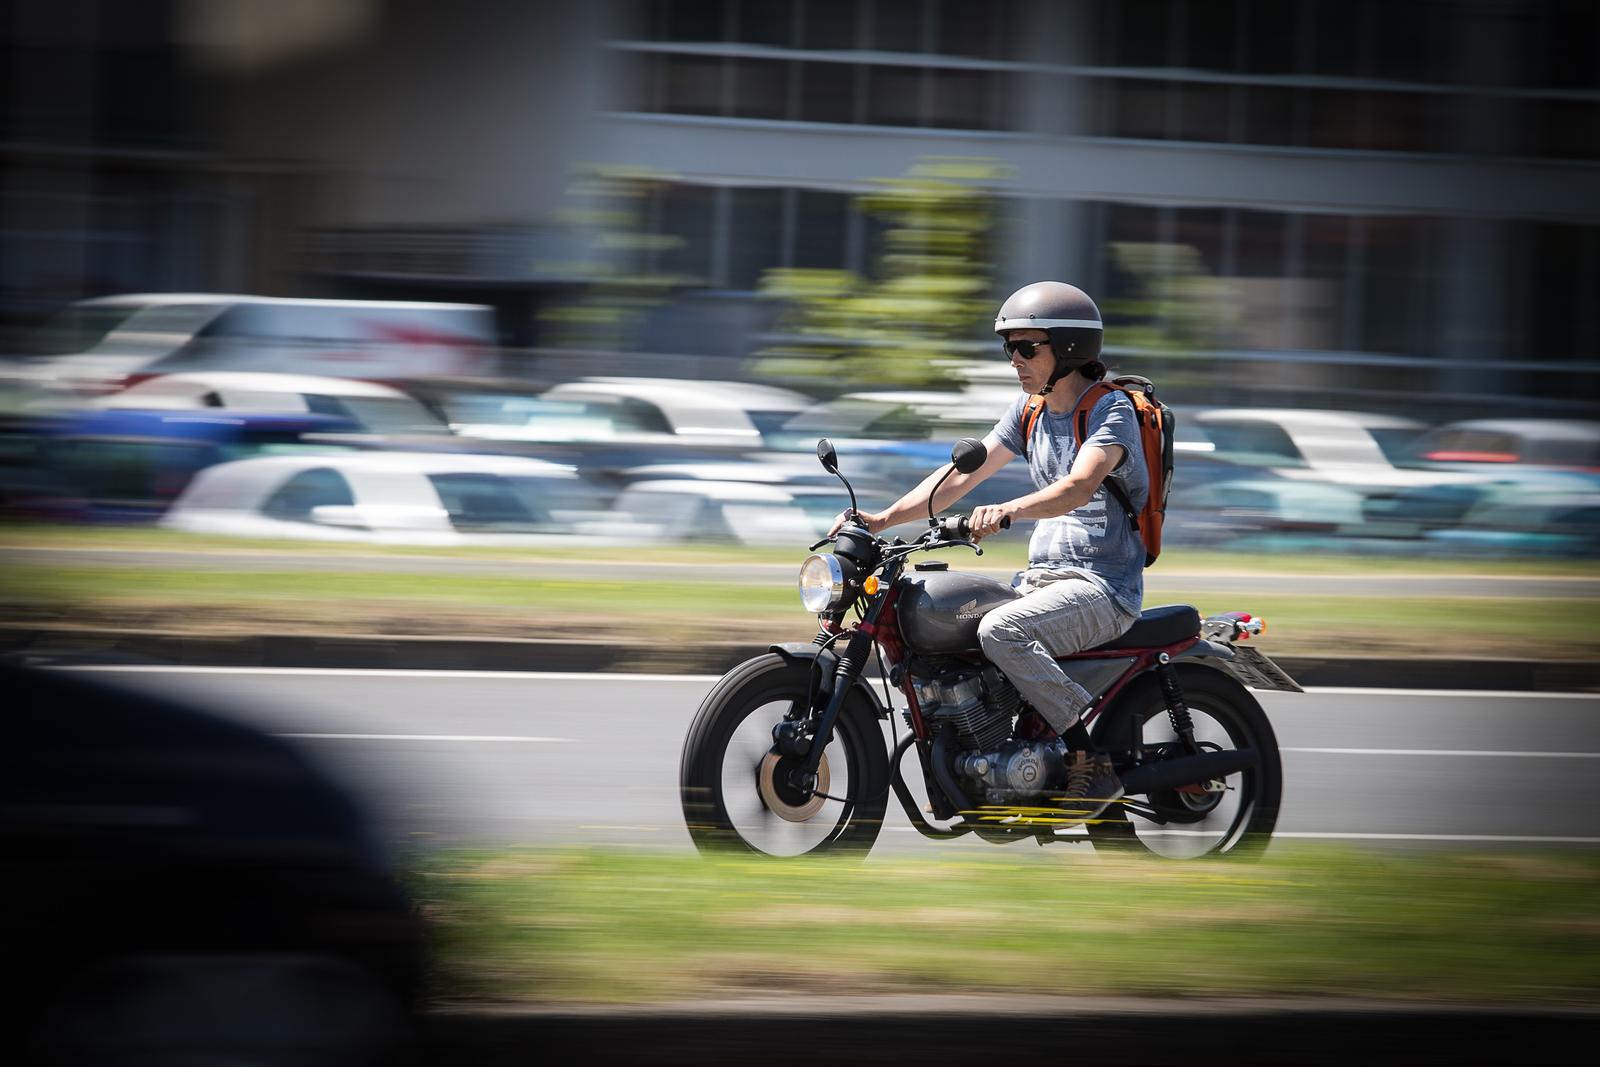 05.07.2016., Zagreb - Motociklisti u gradskom prometu. "nPhoto: Davor Puklavec/PIXSELL